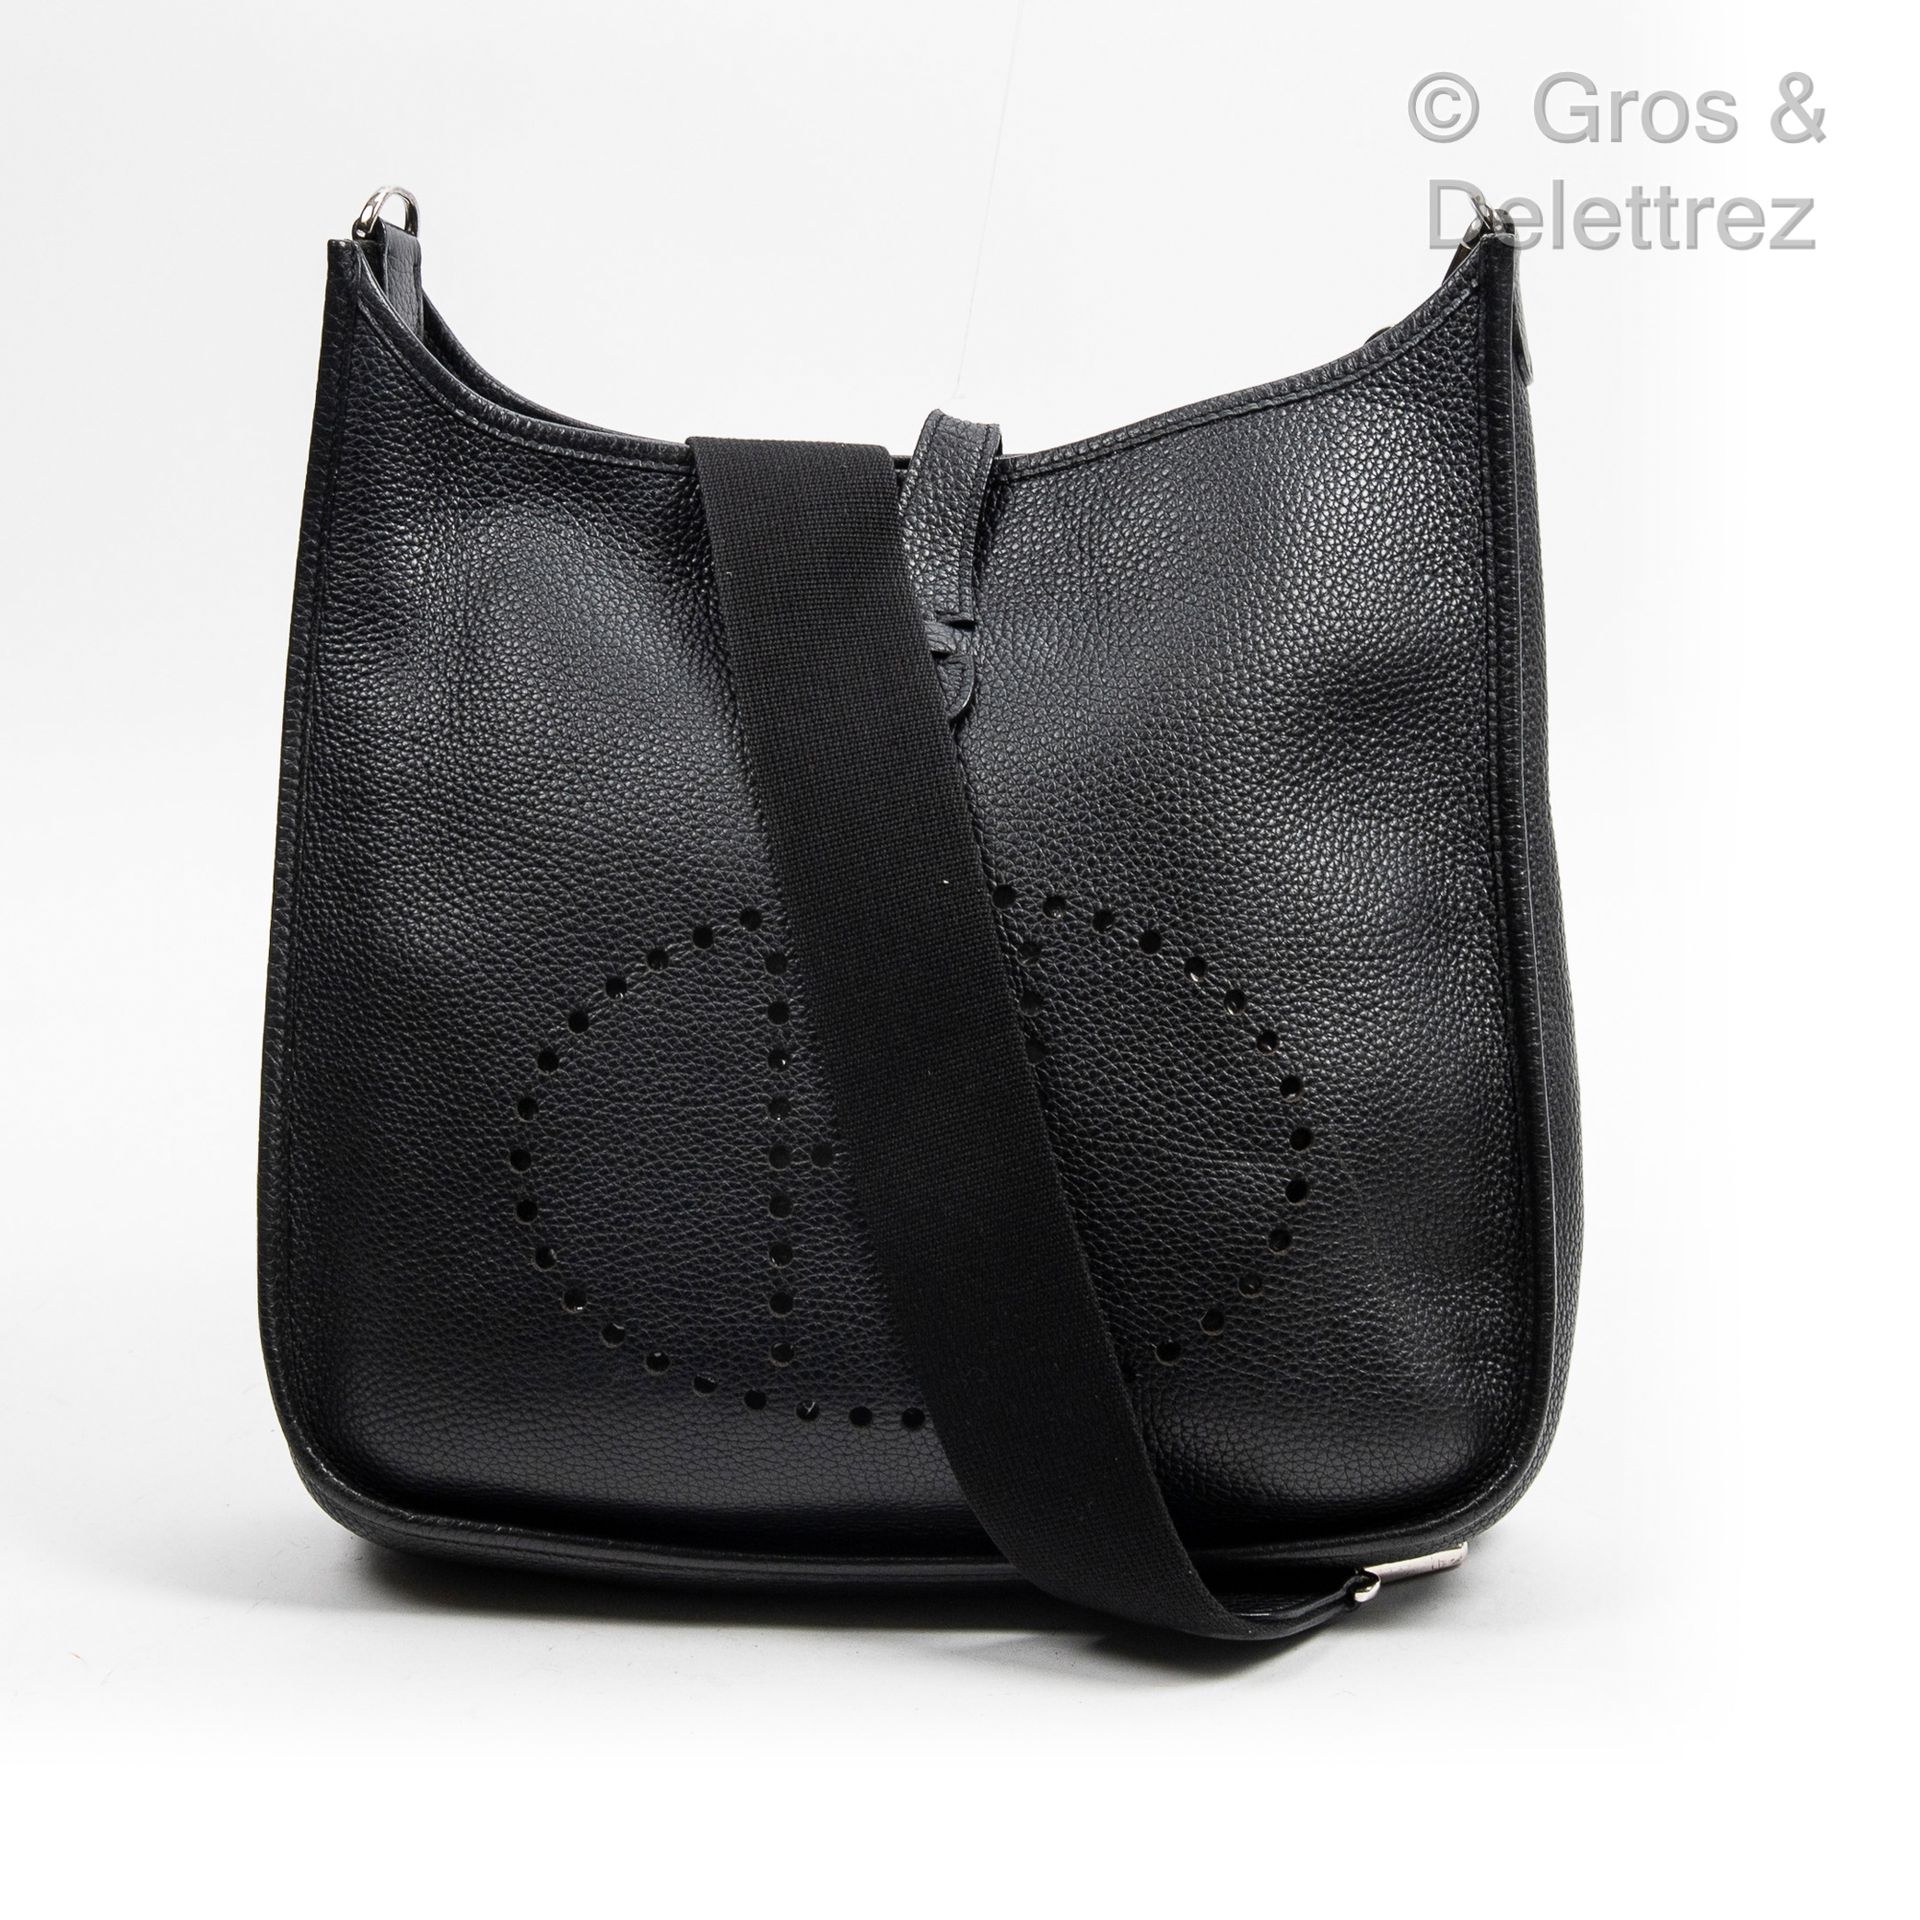 HERMÈS Paris made in France Year 2006

Bag " Evelyne " 30 cm in black Togo leath&hellip;